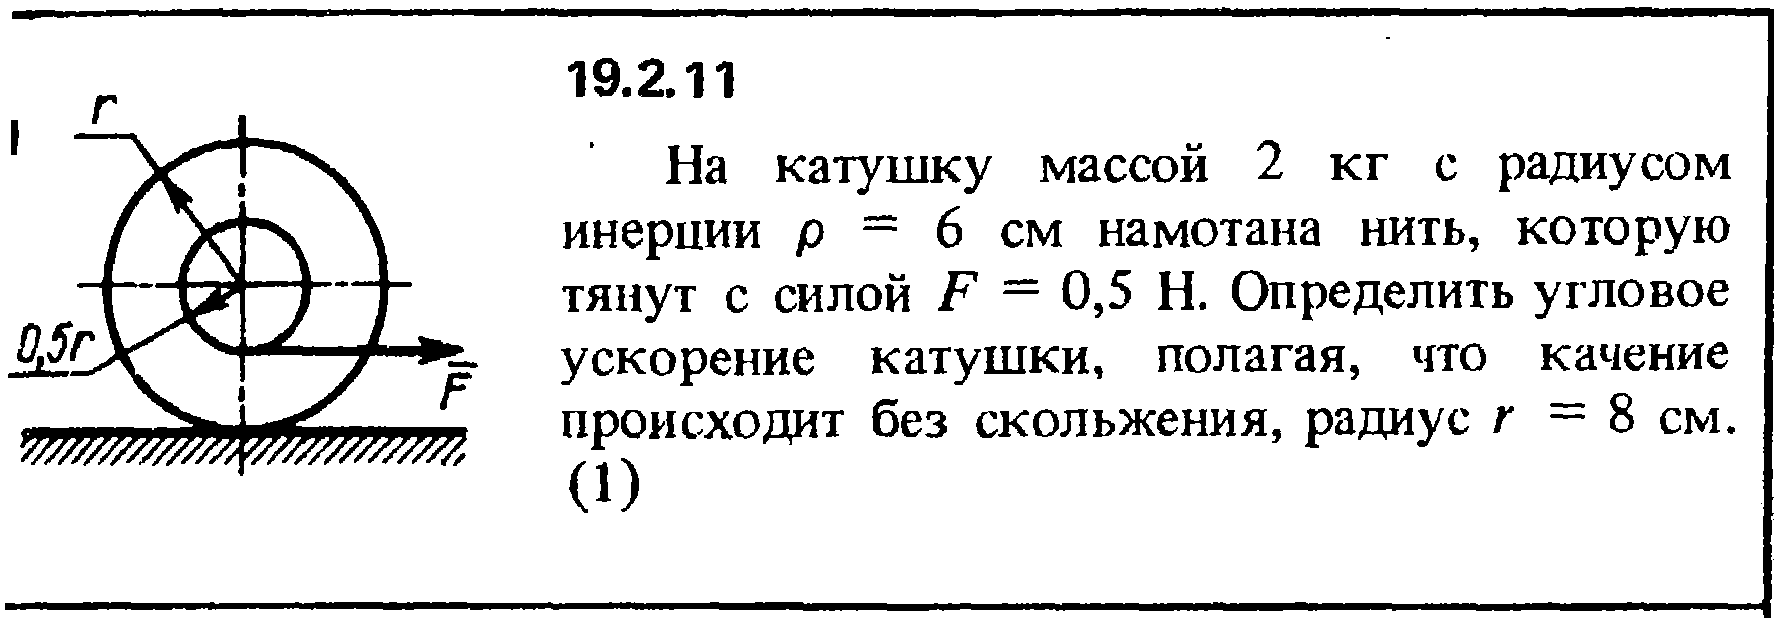 Решение 19.2.11 из сборника (решебника) Кепе О.Е. 1989